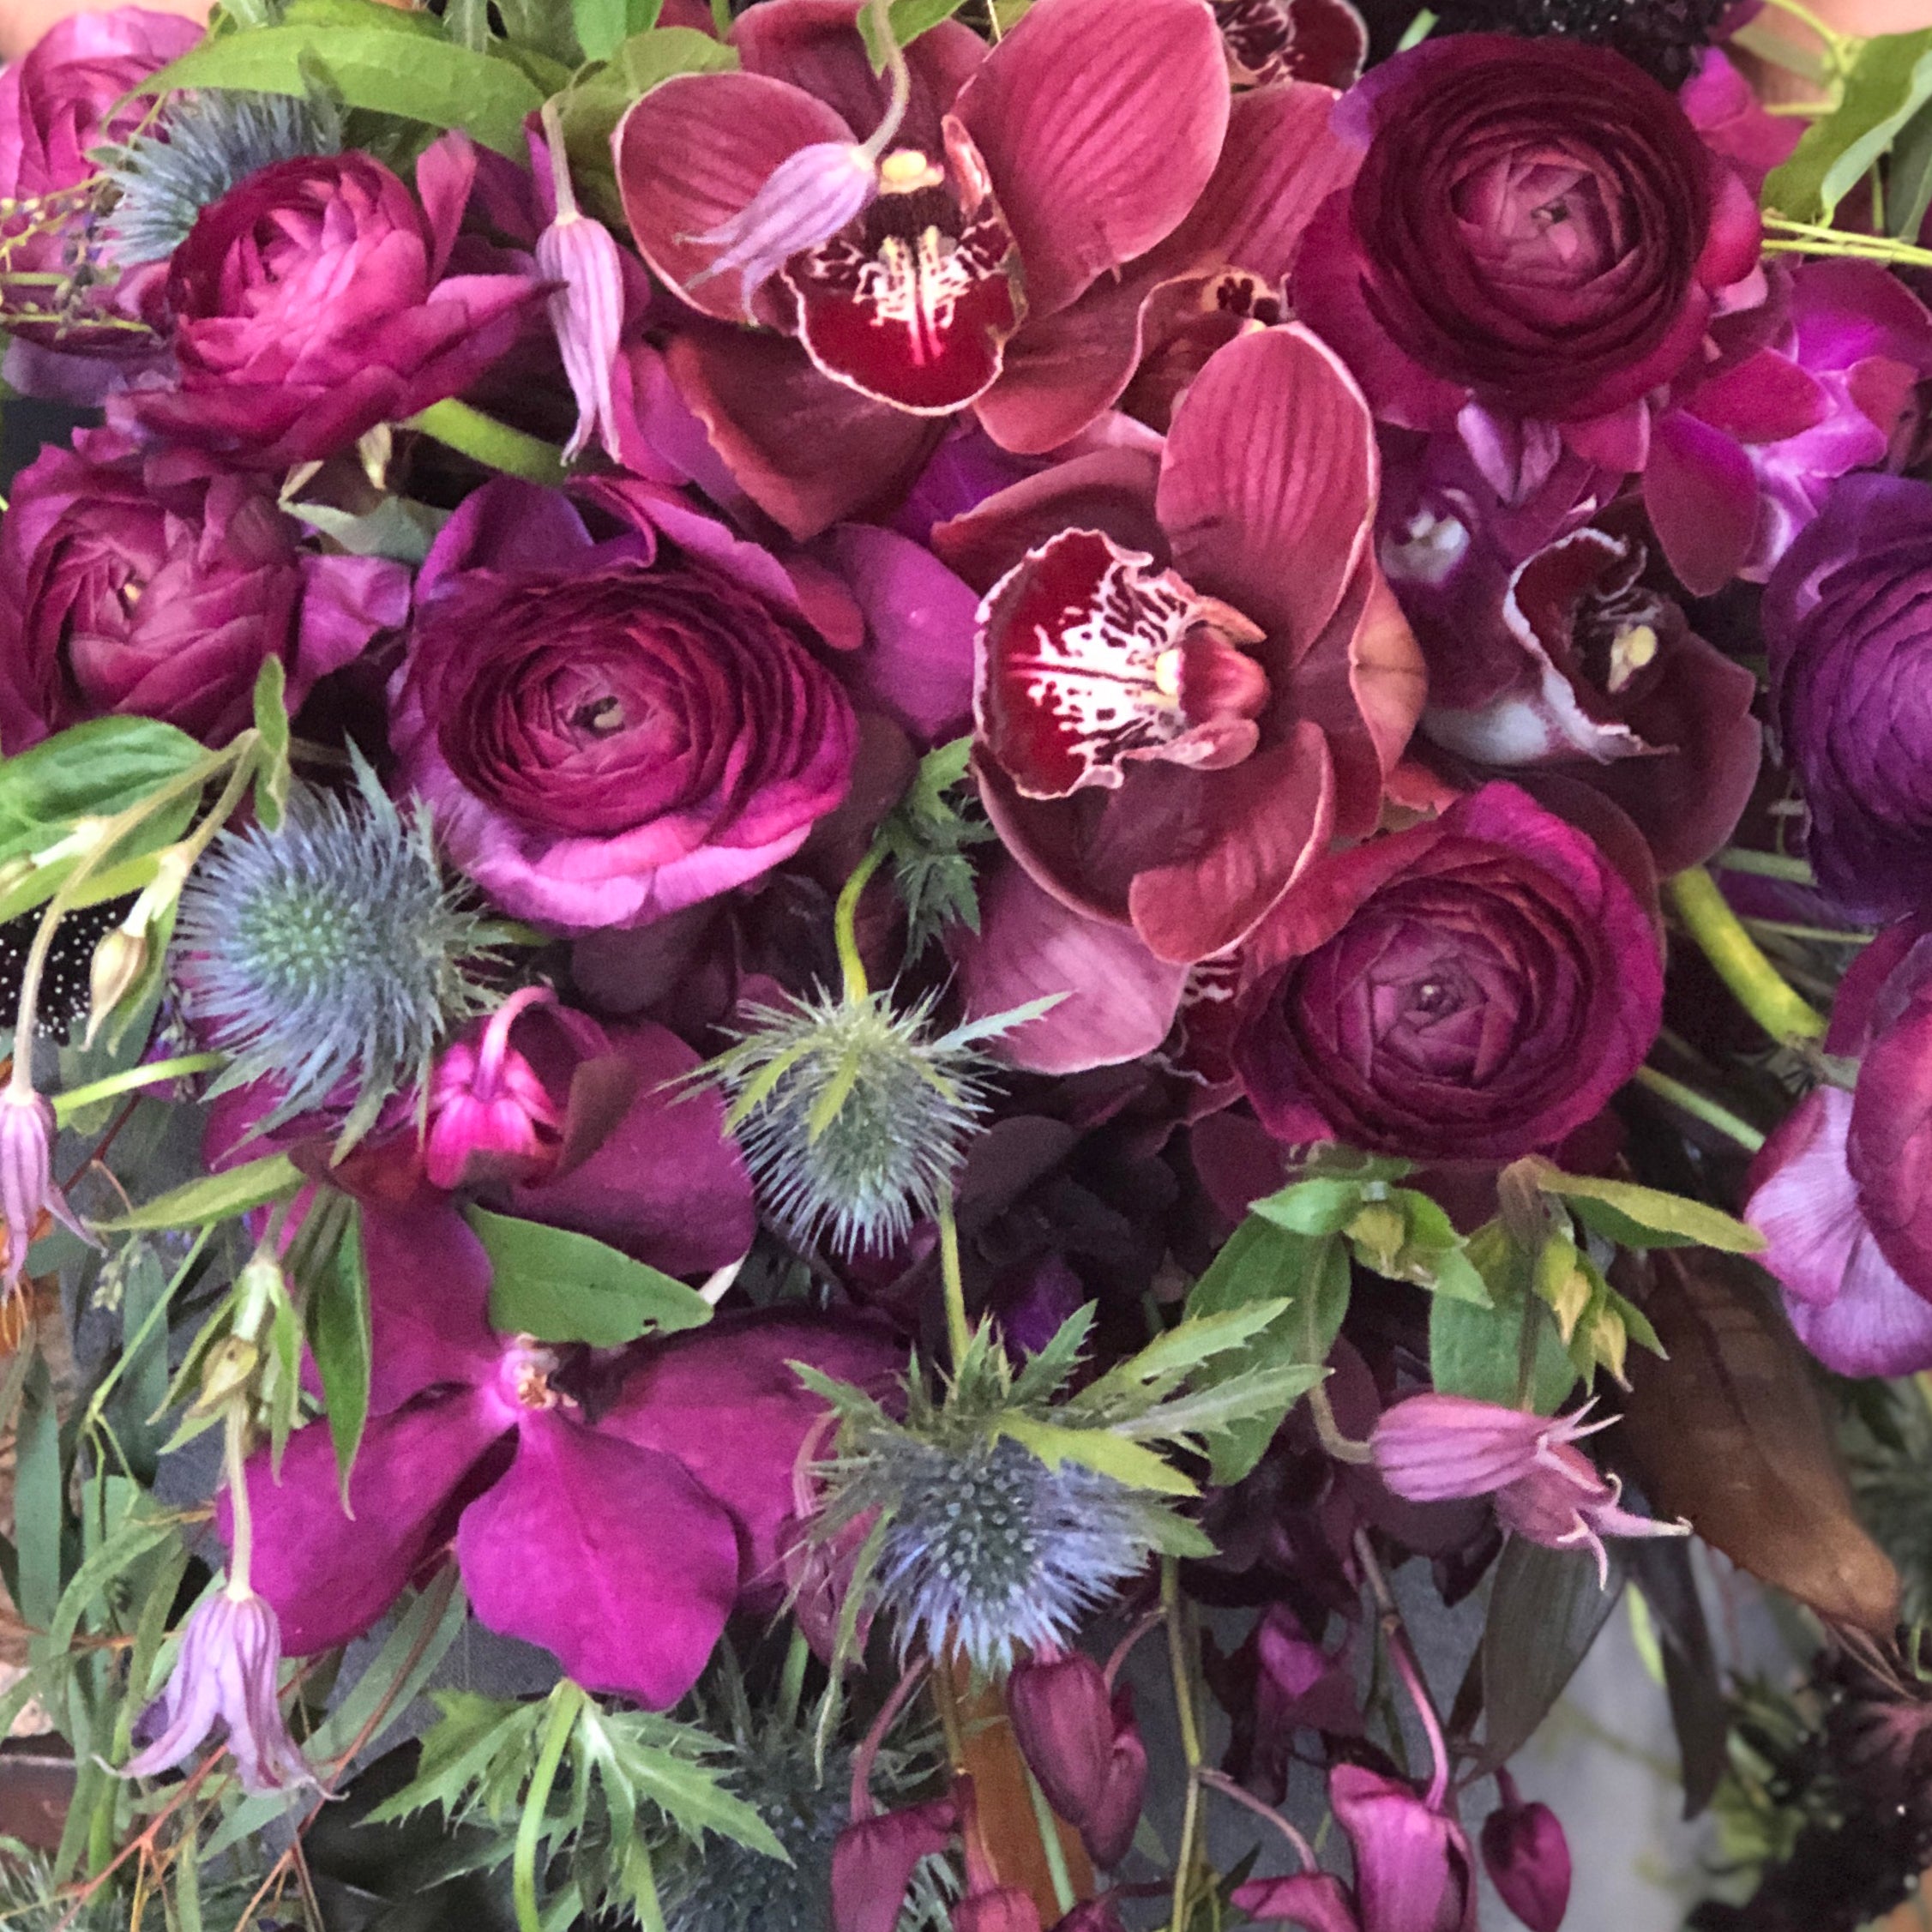 Rebel Petal Ottawa Florist Weddings Funerals birthdays Anniversaries Floral Delivery